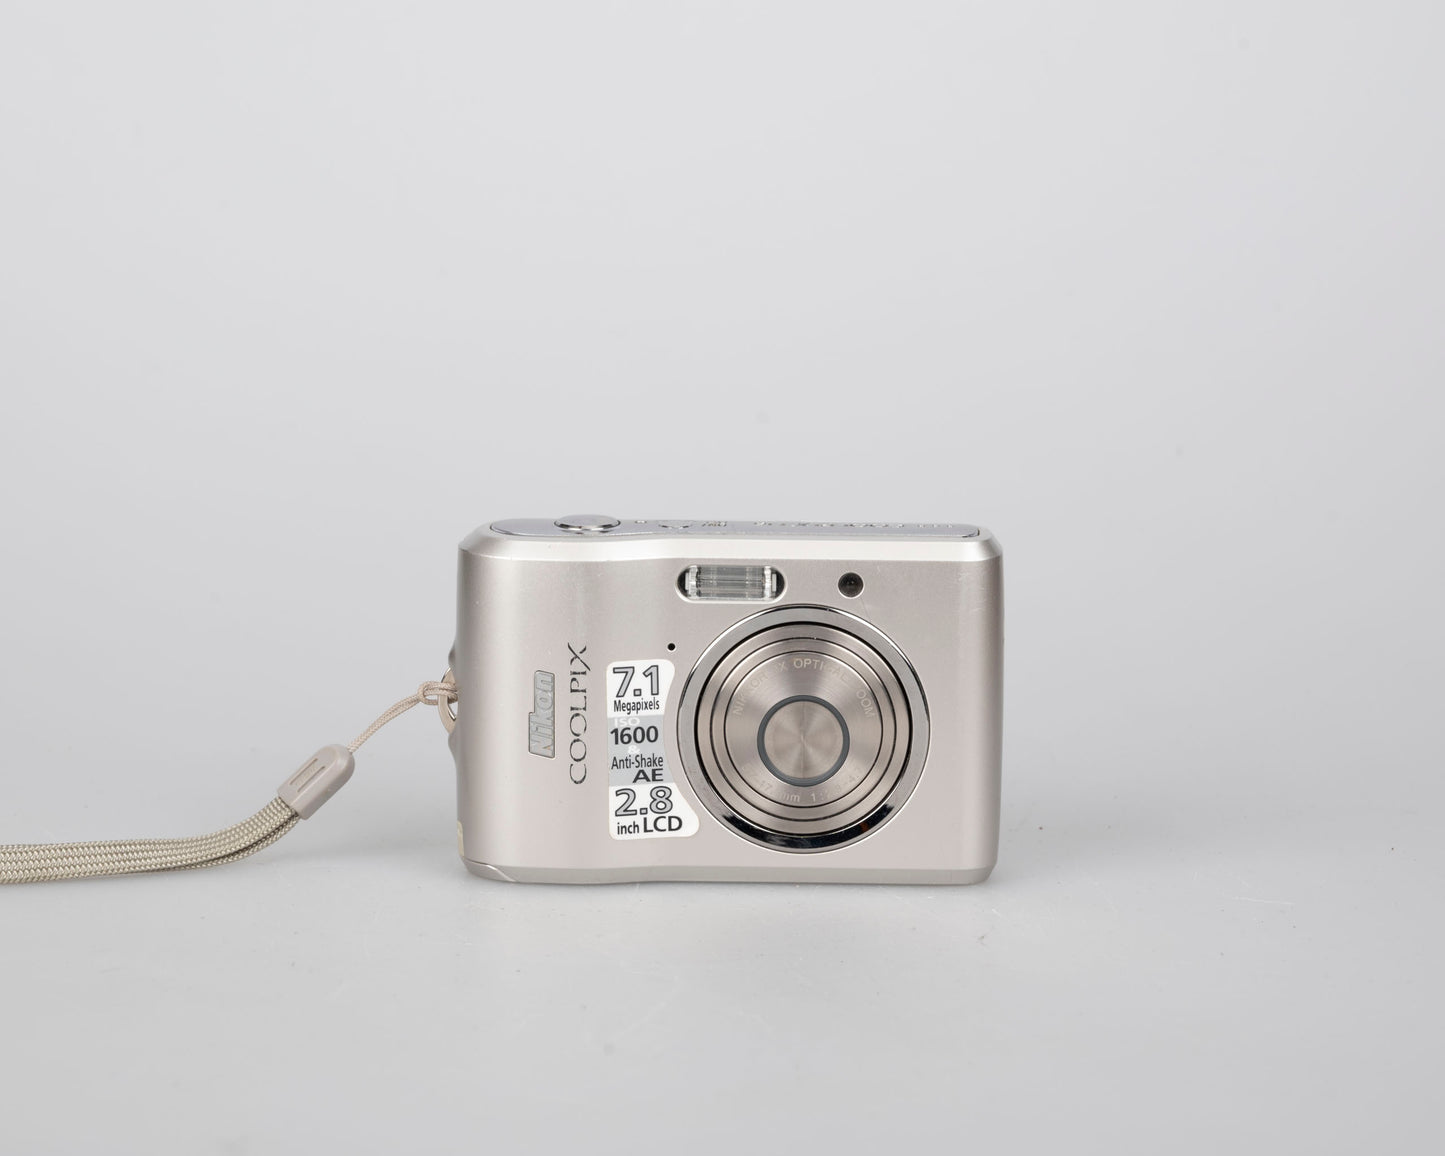 Nikon Coolpix L16 7.1 MP CCD sensor digicam w/ 1GB SD card + original box and accessories (uses AA batteries)